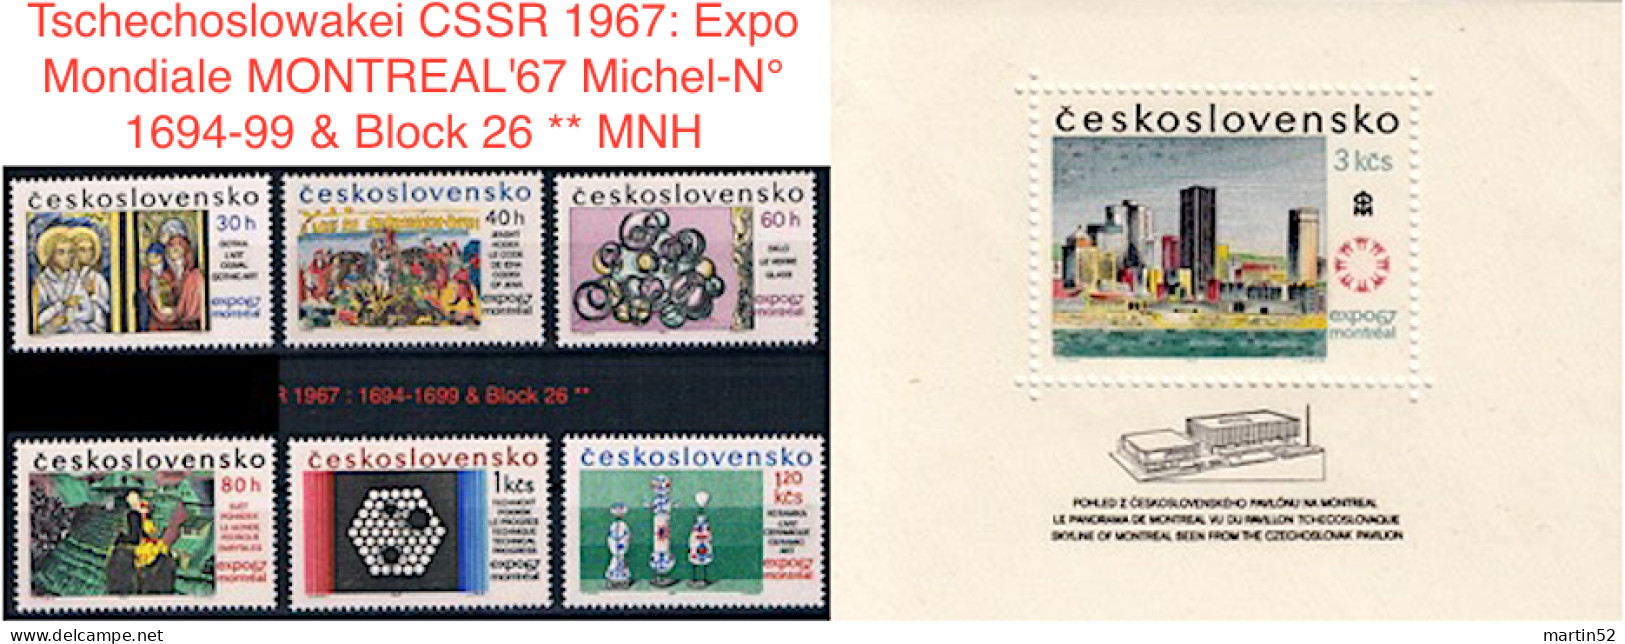 Tschechoslowakei CSSR 1967: Expo Mondiale MONTREAL'67 Michel-N° 1694-99 & Block 26 ** MNH (NOTA BENE) - 1967 – Montreal (Canada)